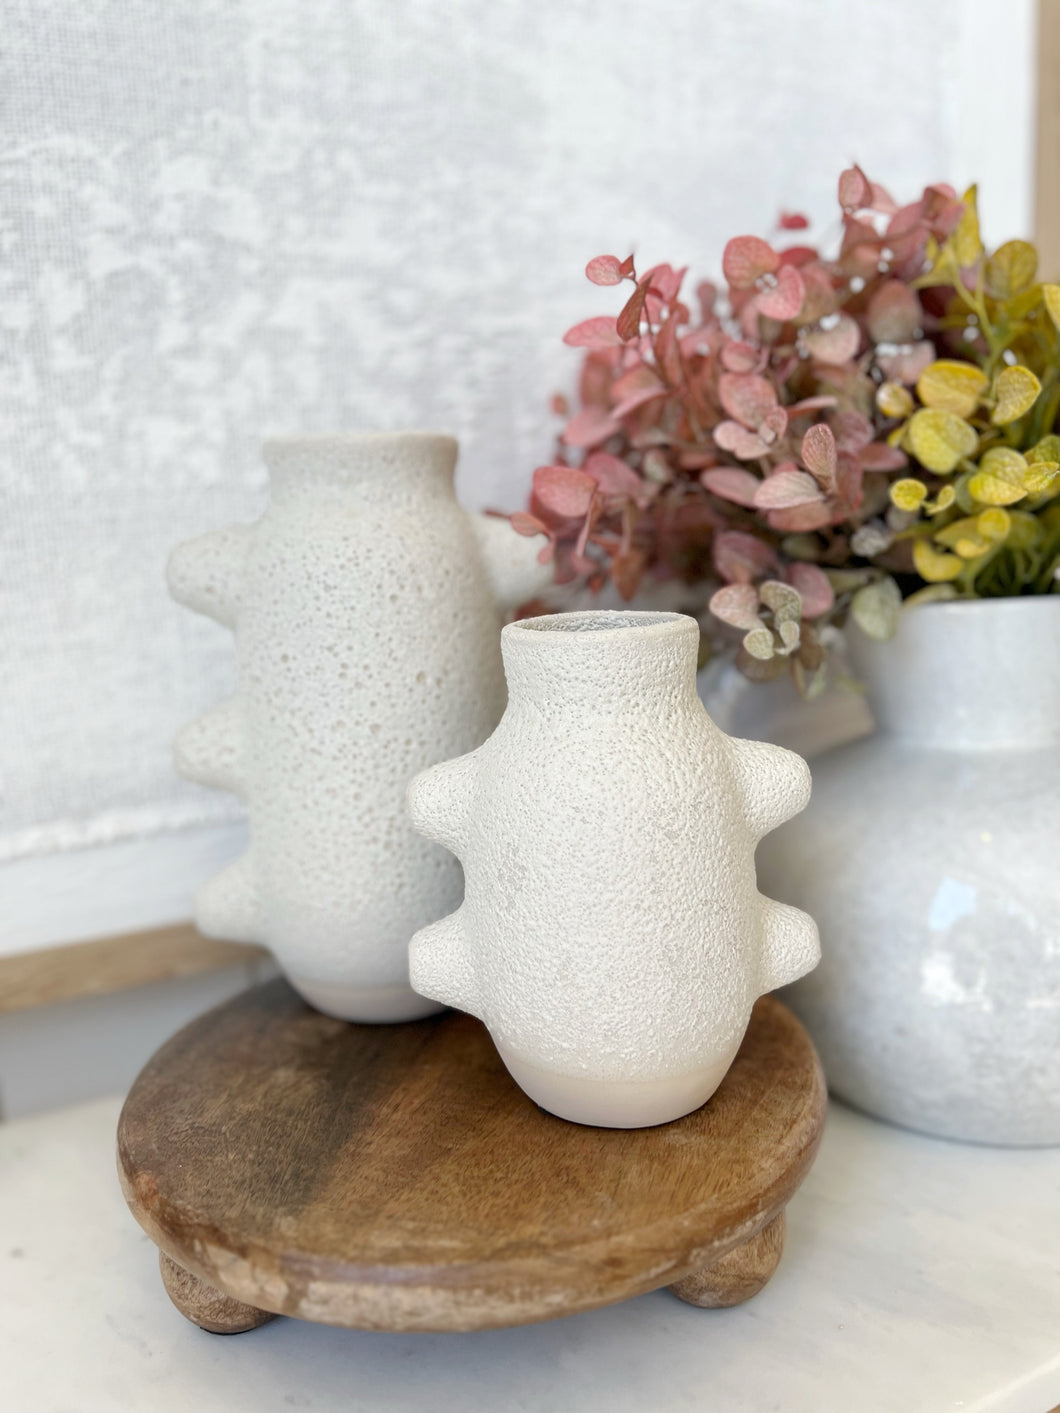 Earthenware Vases